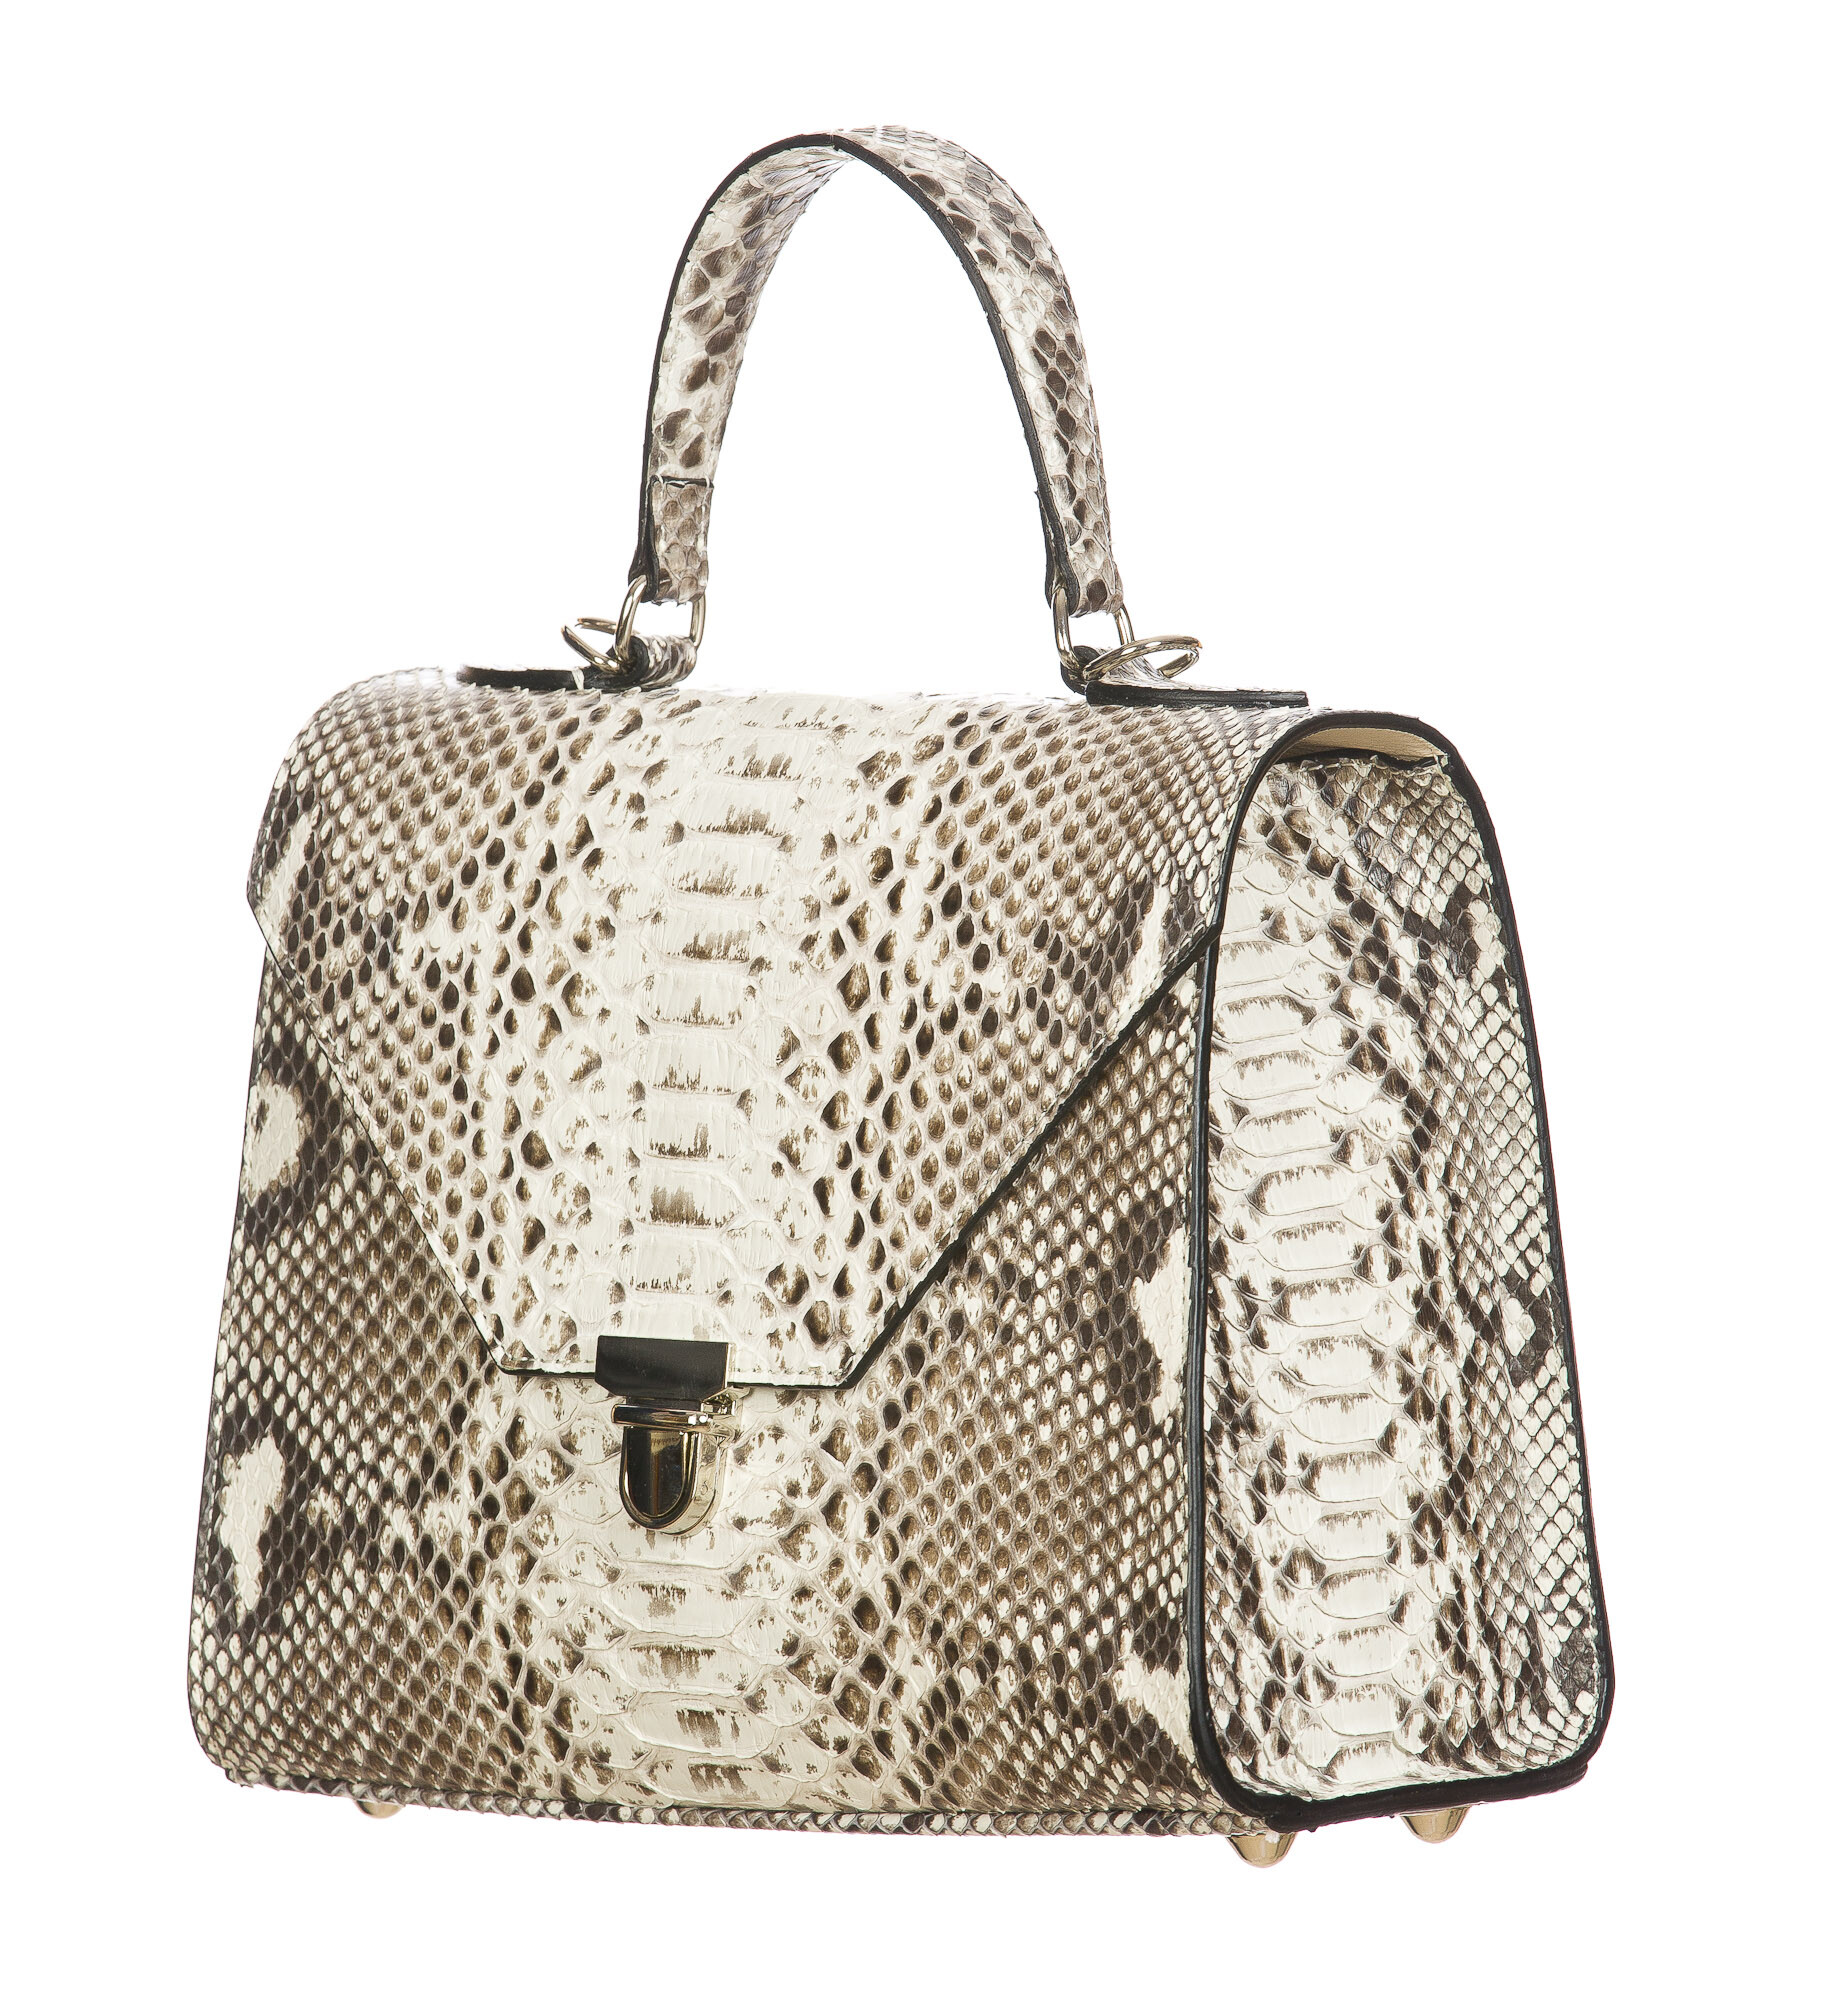 MIRANDA : ladies bag in python leather, handbag, color : STONE, Made in ...